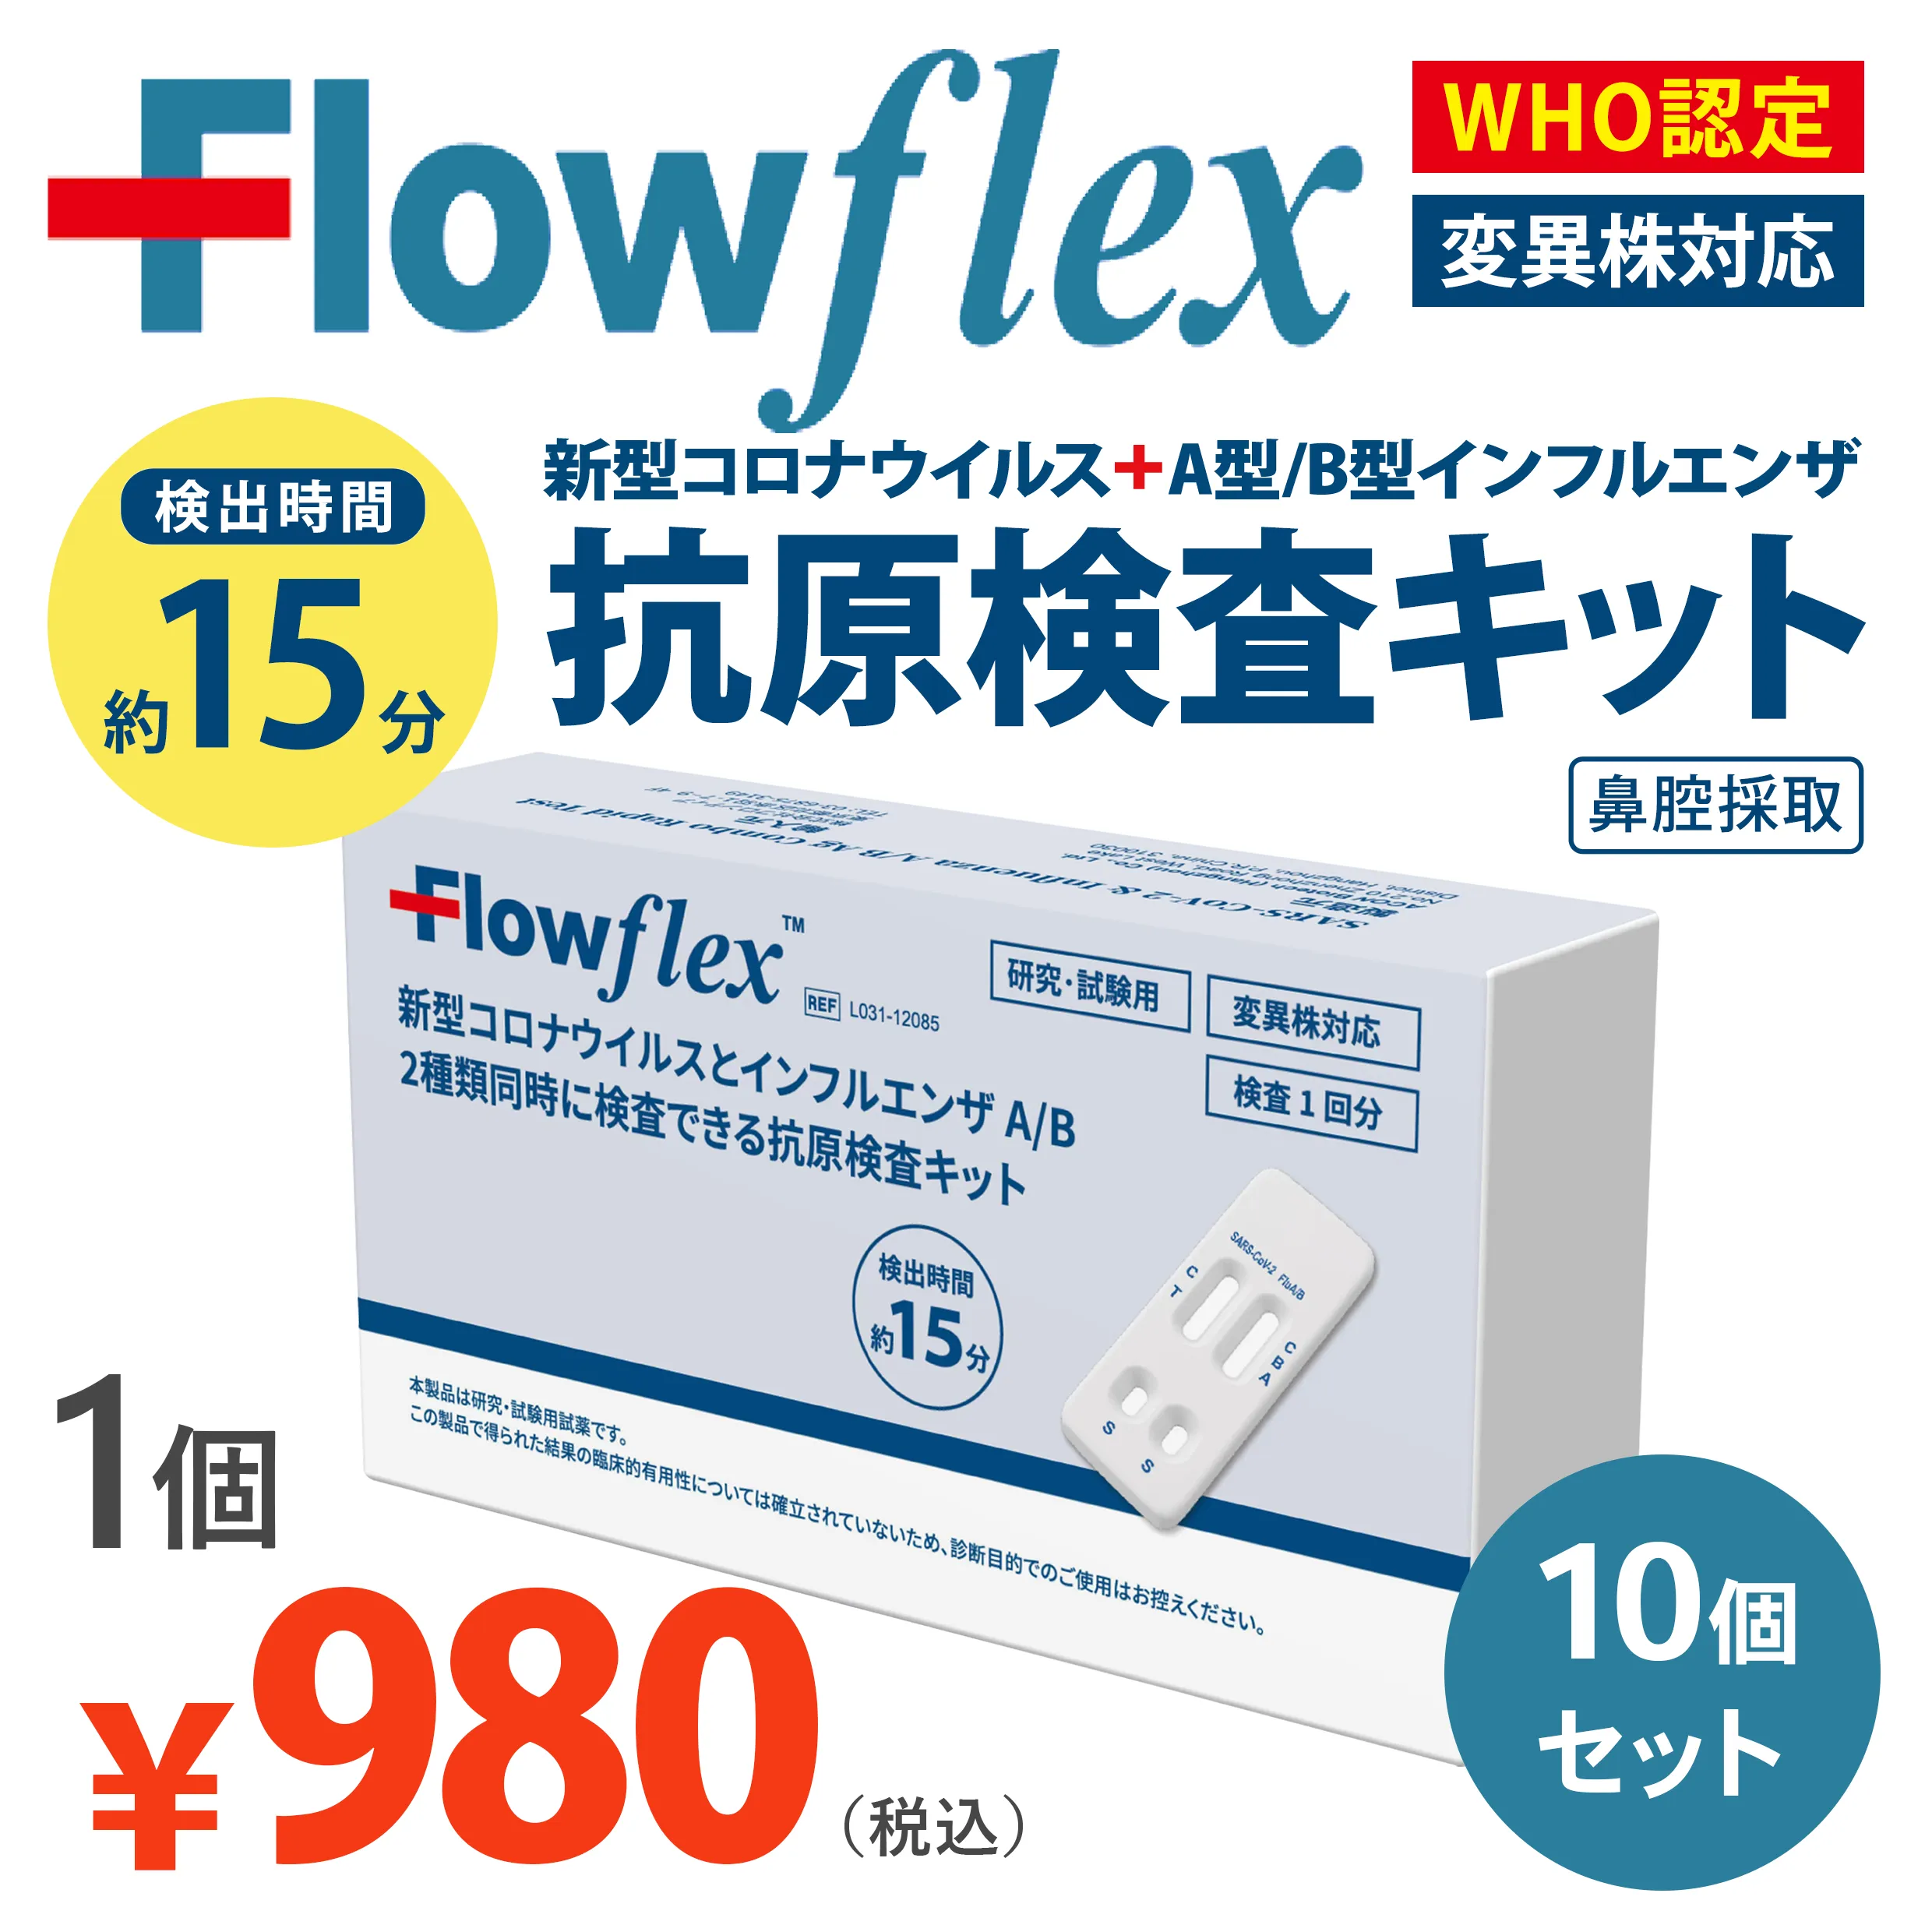 Flow flex 新型コロナ＋インフルエンザウイルスA_B抗原検査キット